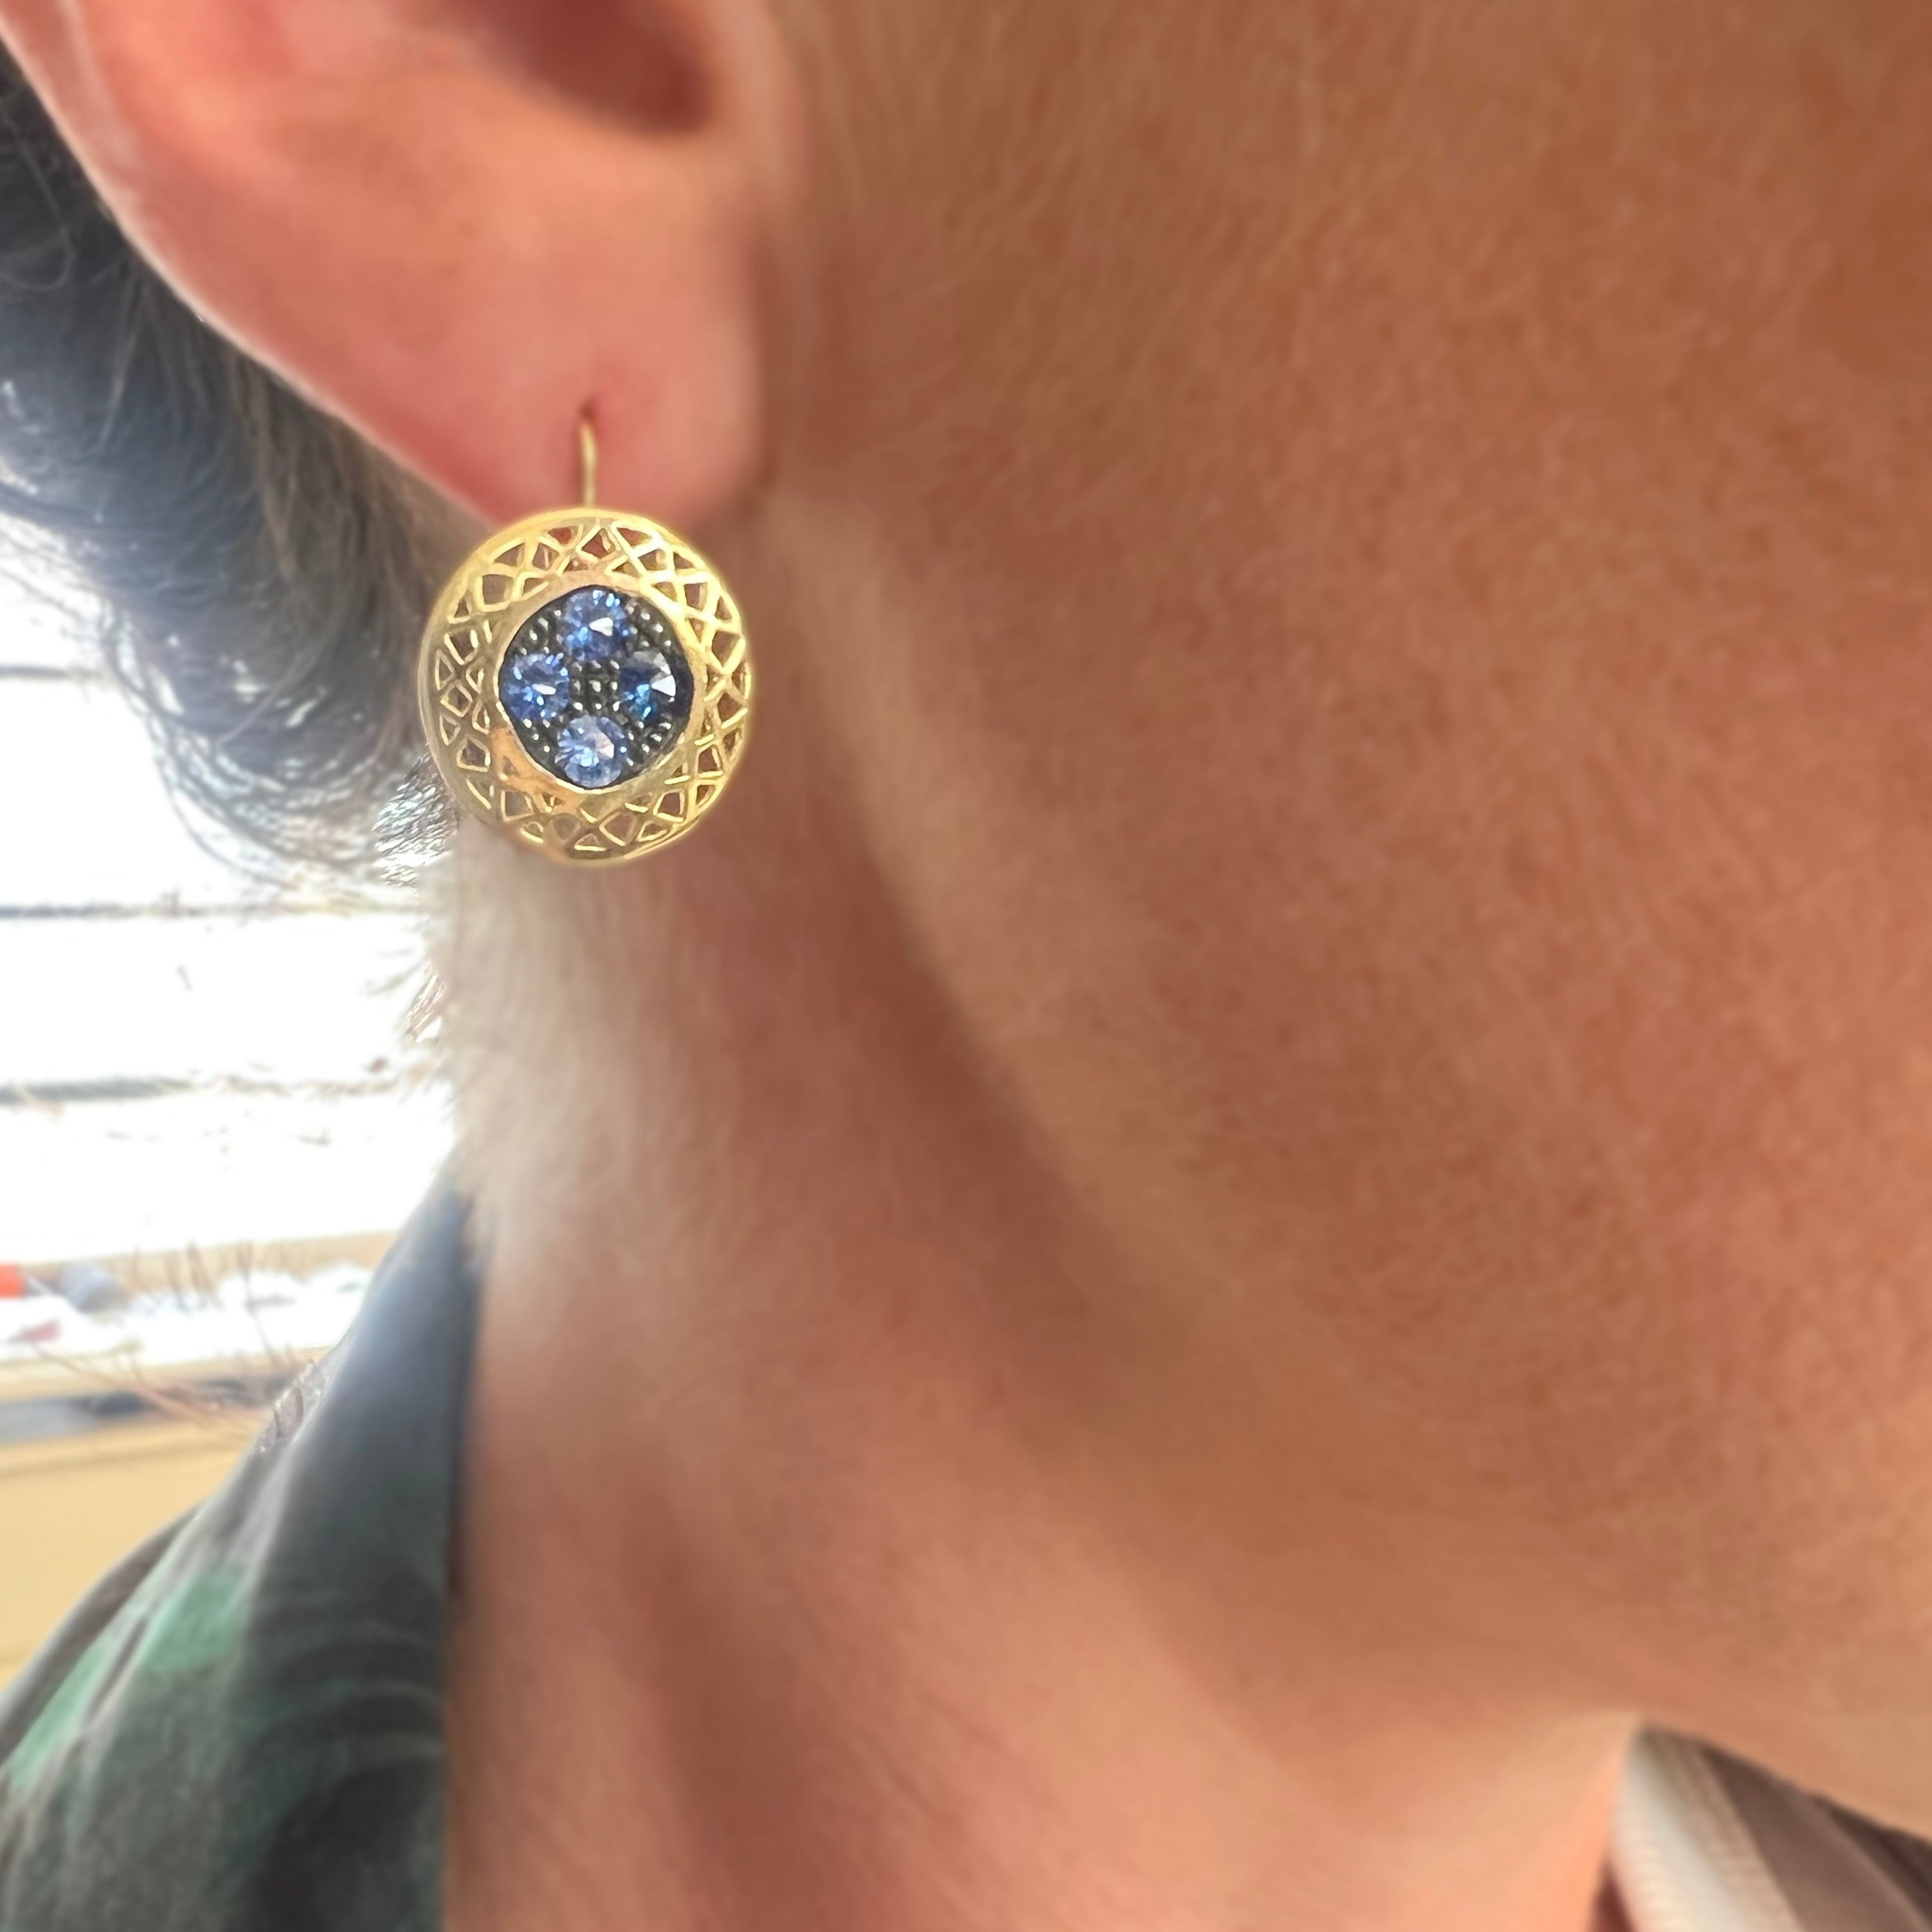 Blue Sapphire Crownwork® Disc Earrings